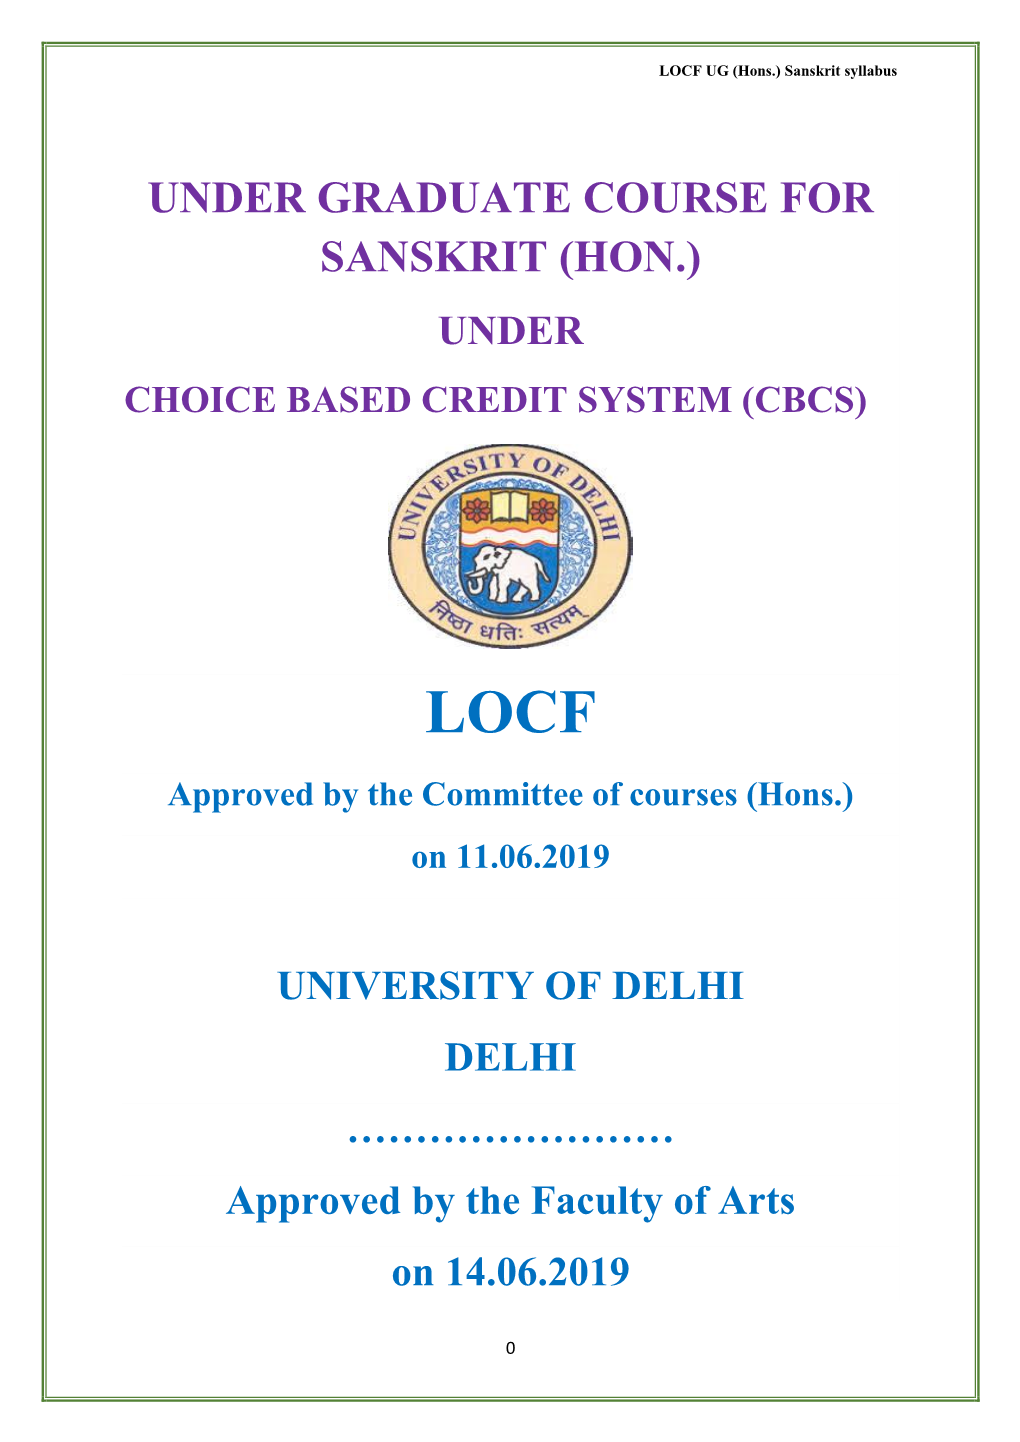 Under Graduate Course for Sanskrit (Hon.) Under Choice Based Credit System (Cbcs)